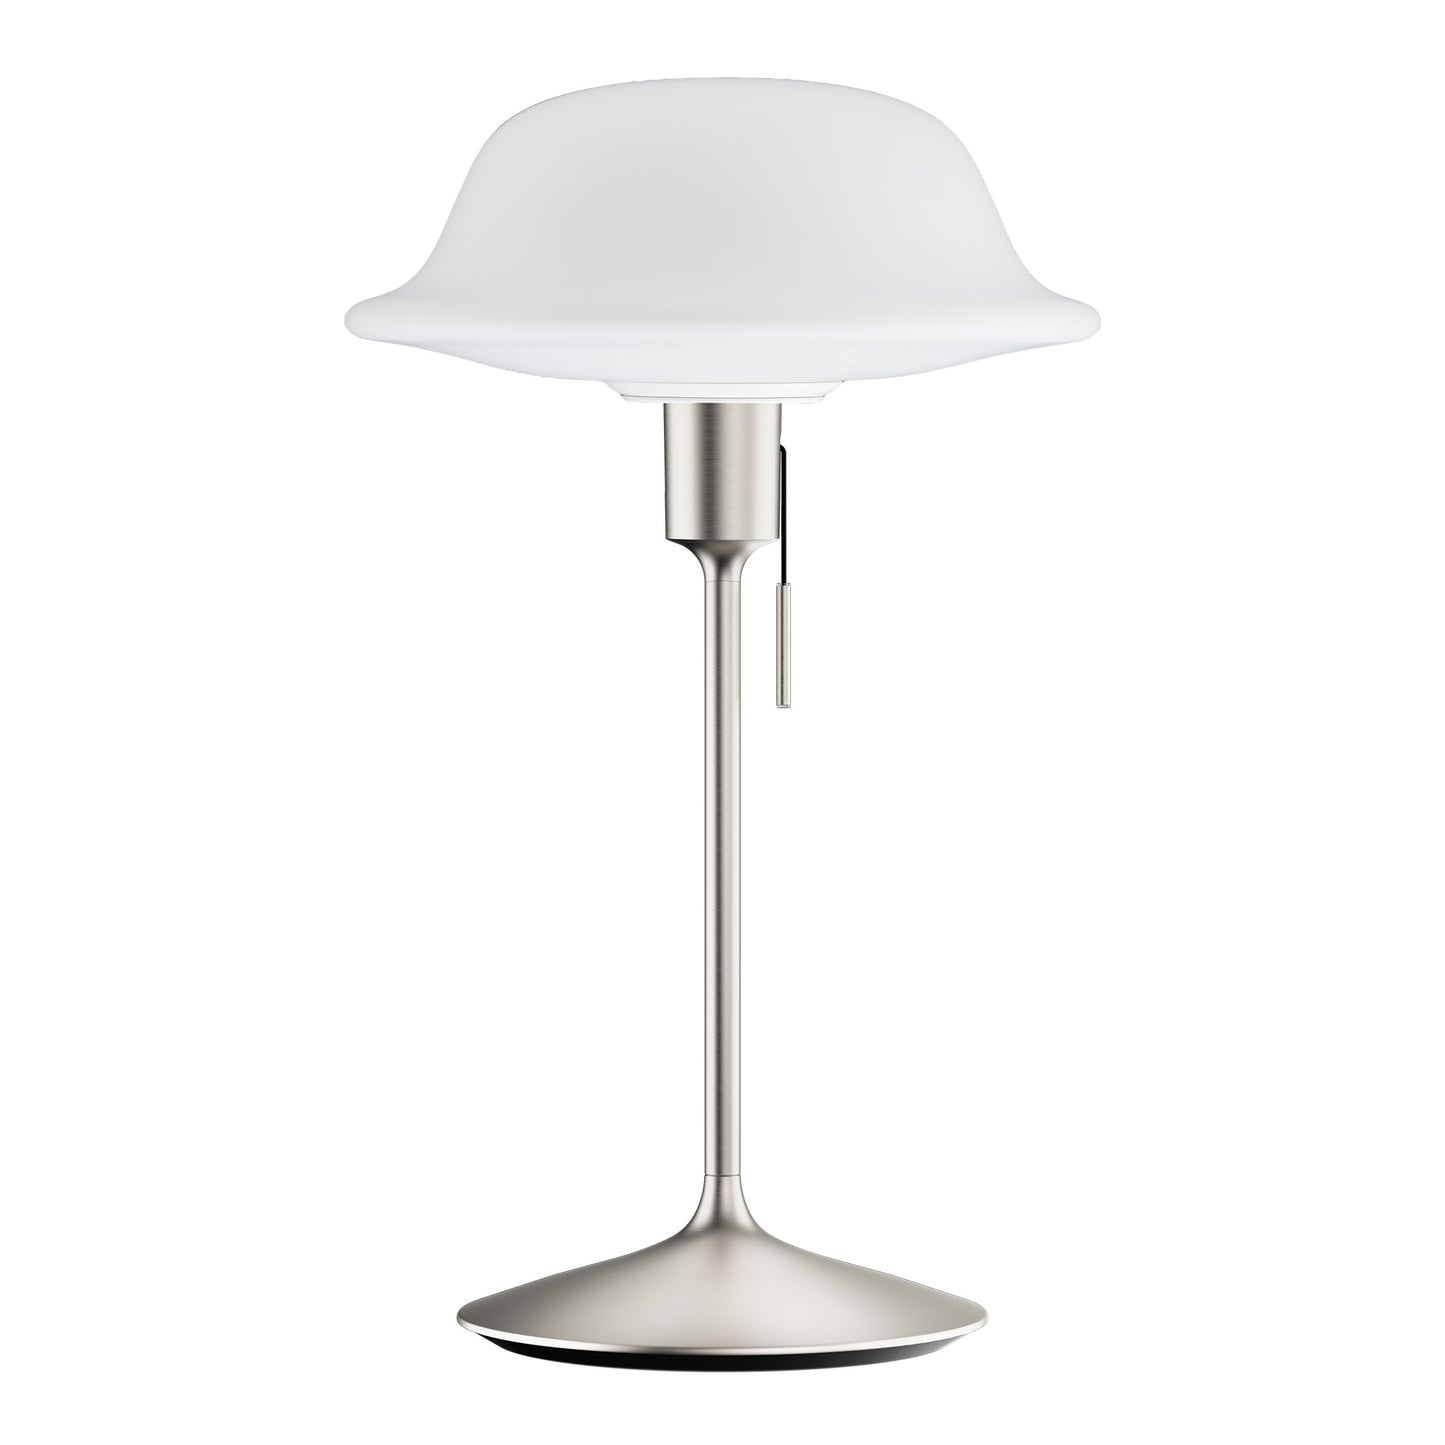 Santé bordslampa i stål med Butler lampskärm i glas